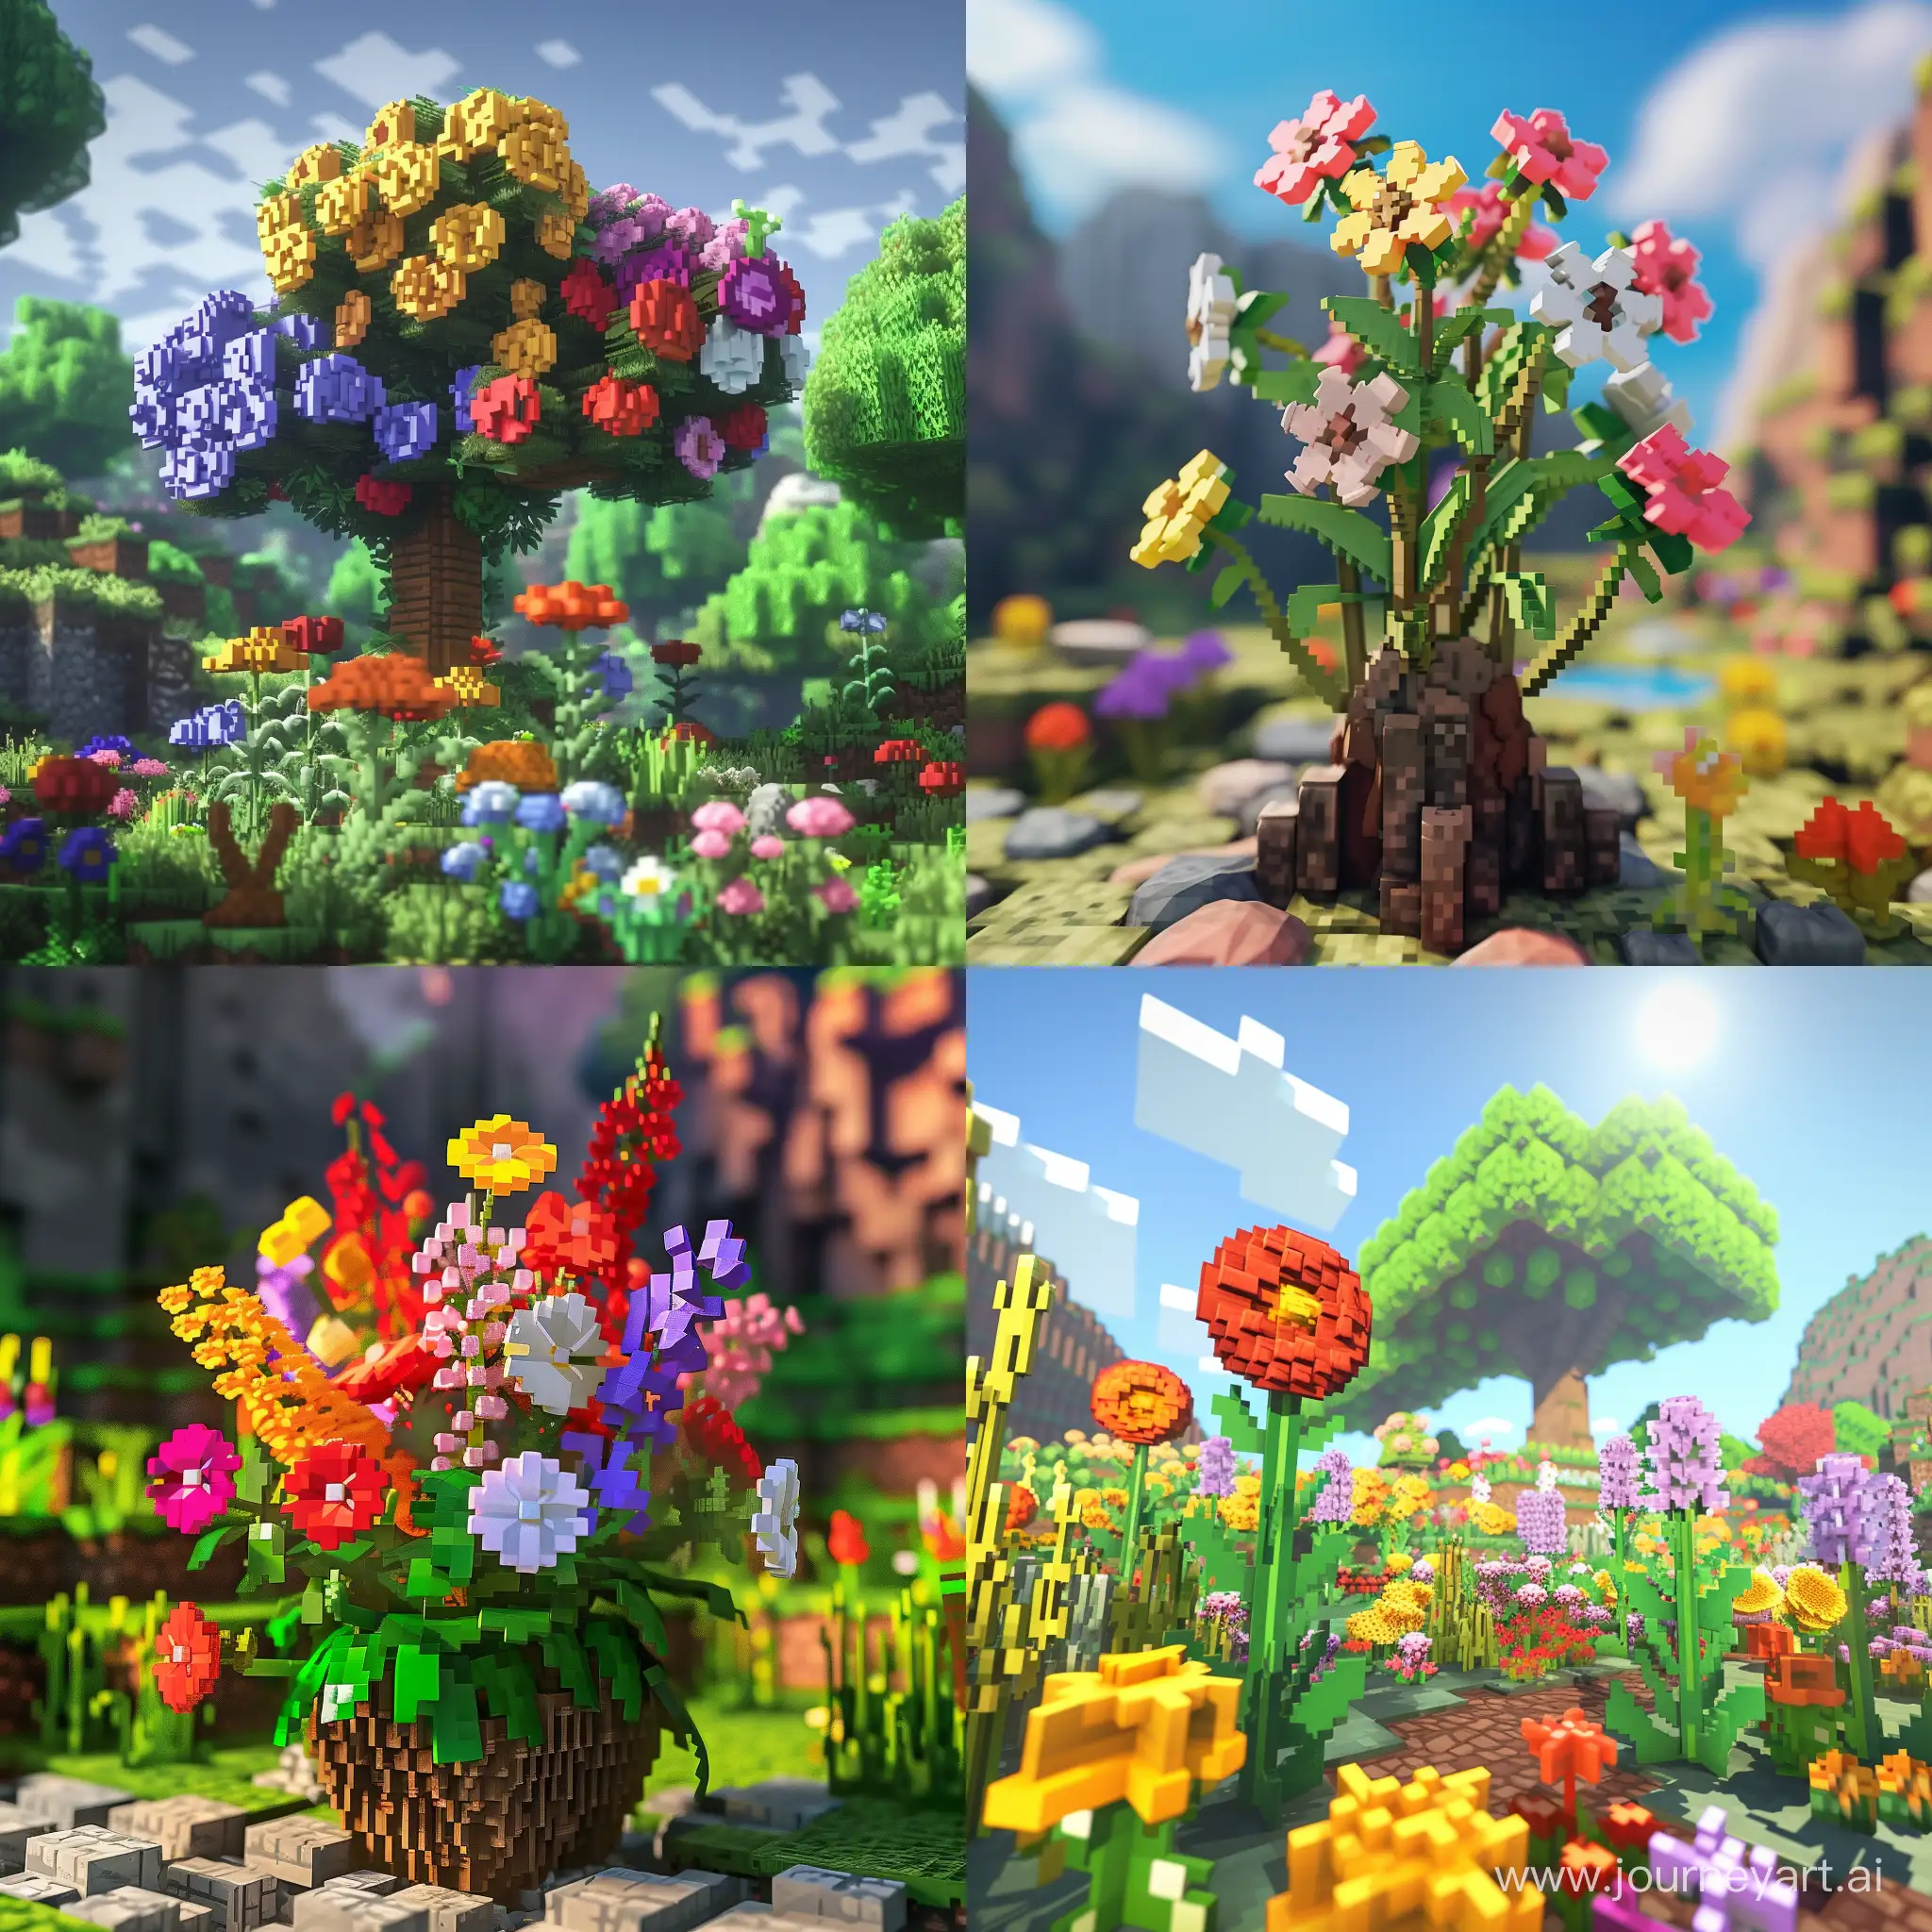 Realistic-Minecraft-Pixelart-Vibrant-Flowers-and-Pokmon-in-3D-World